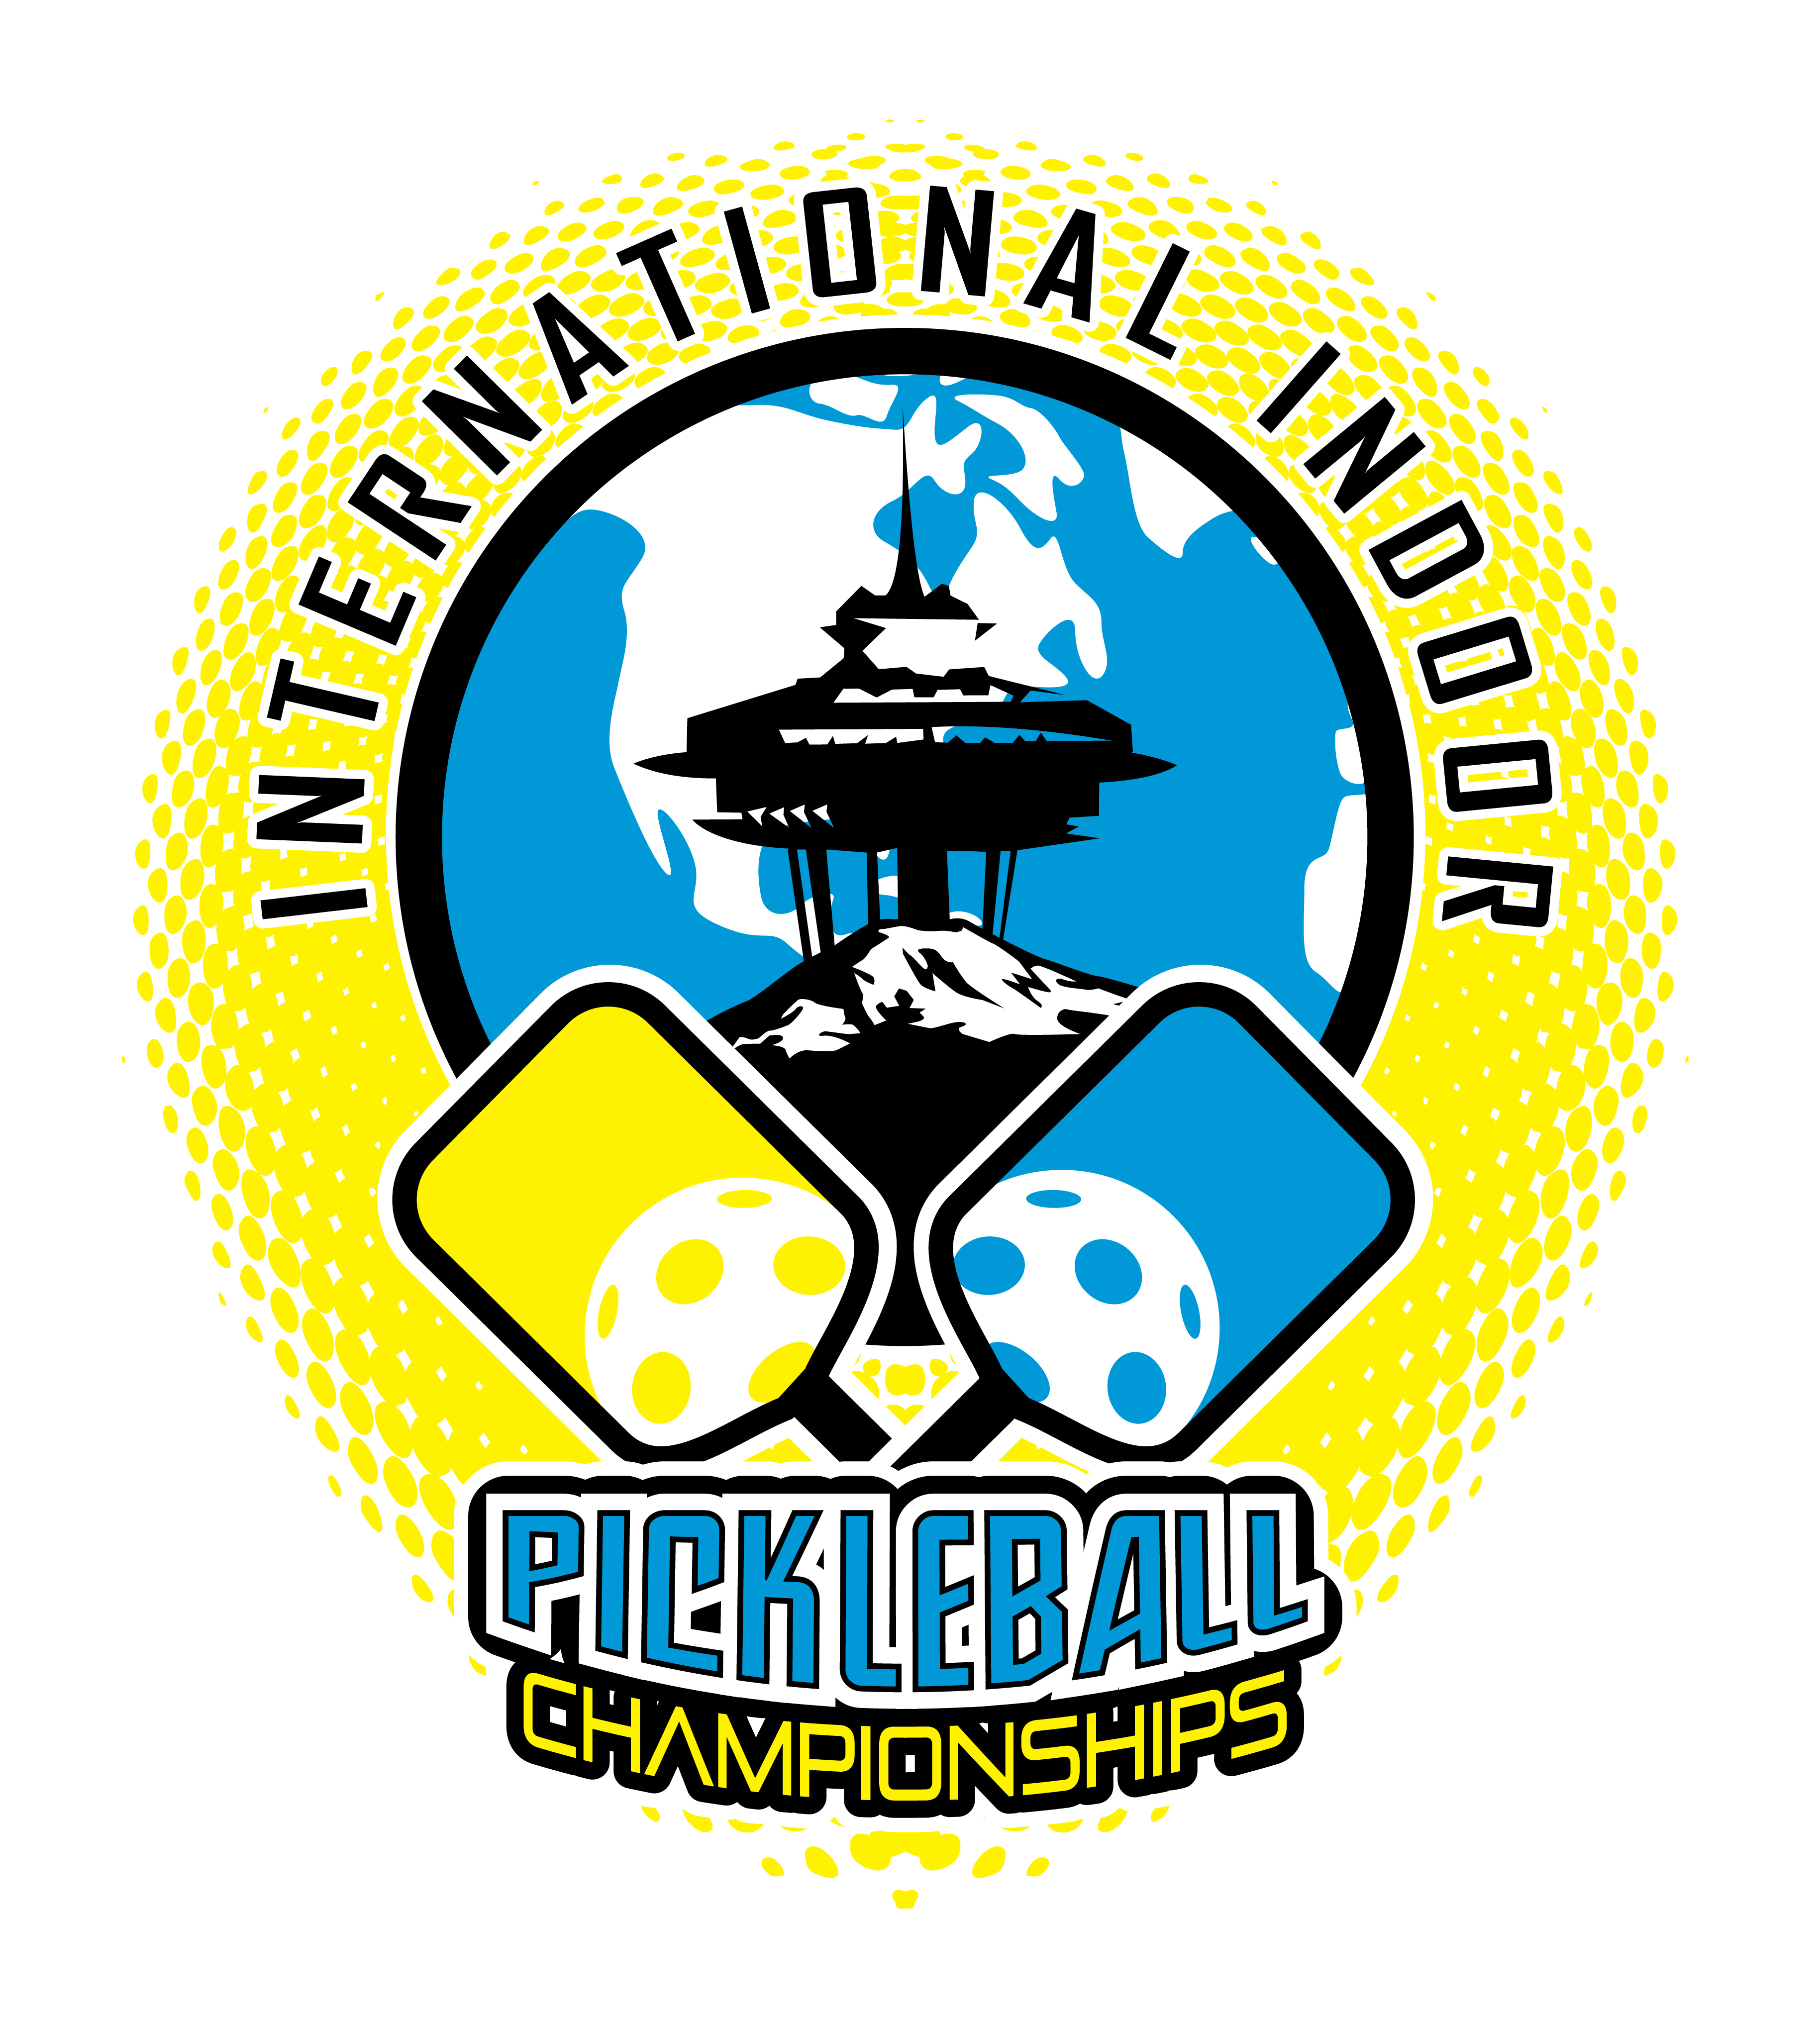 International Indoor Pickleball Championships